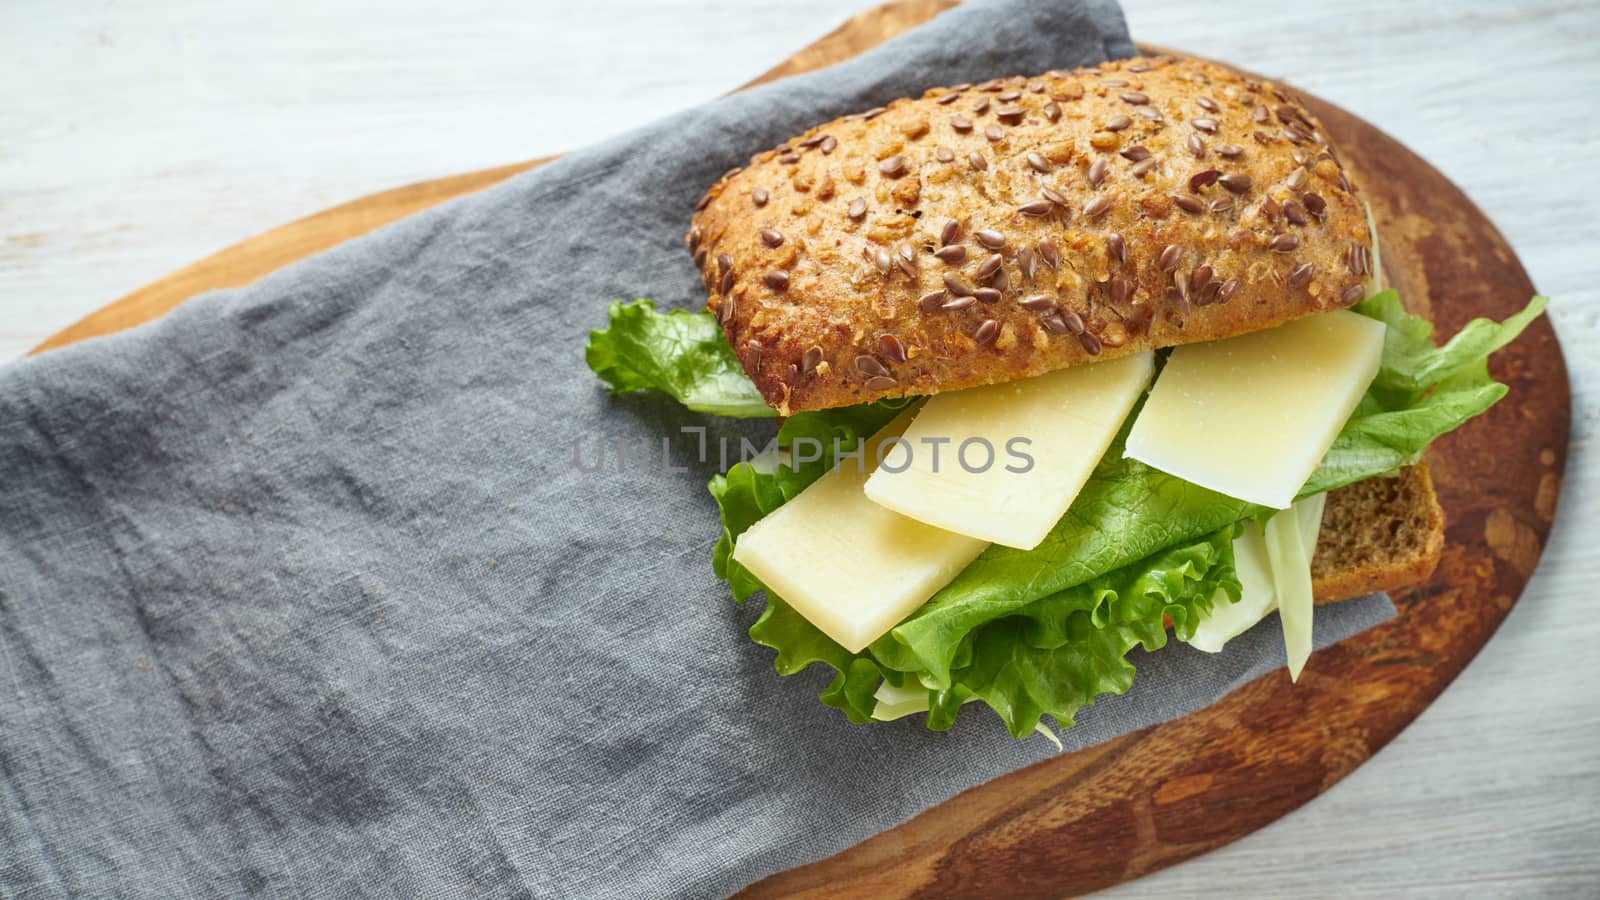 Vegetable sandwich on the wooden board top view by Deniskarpenkov